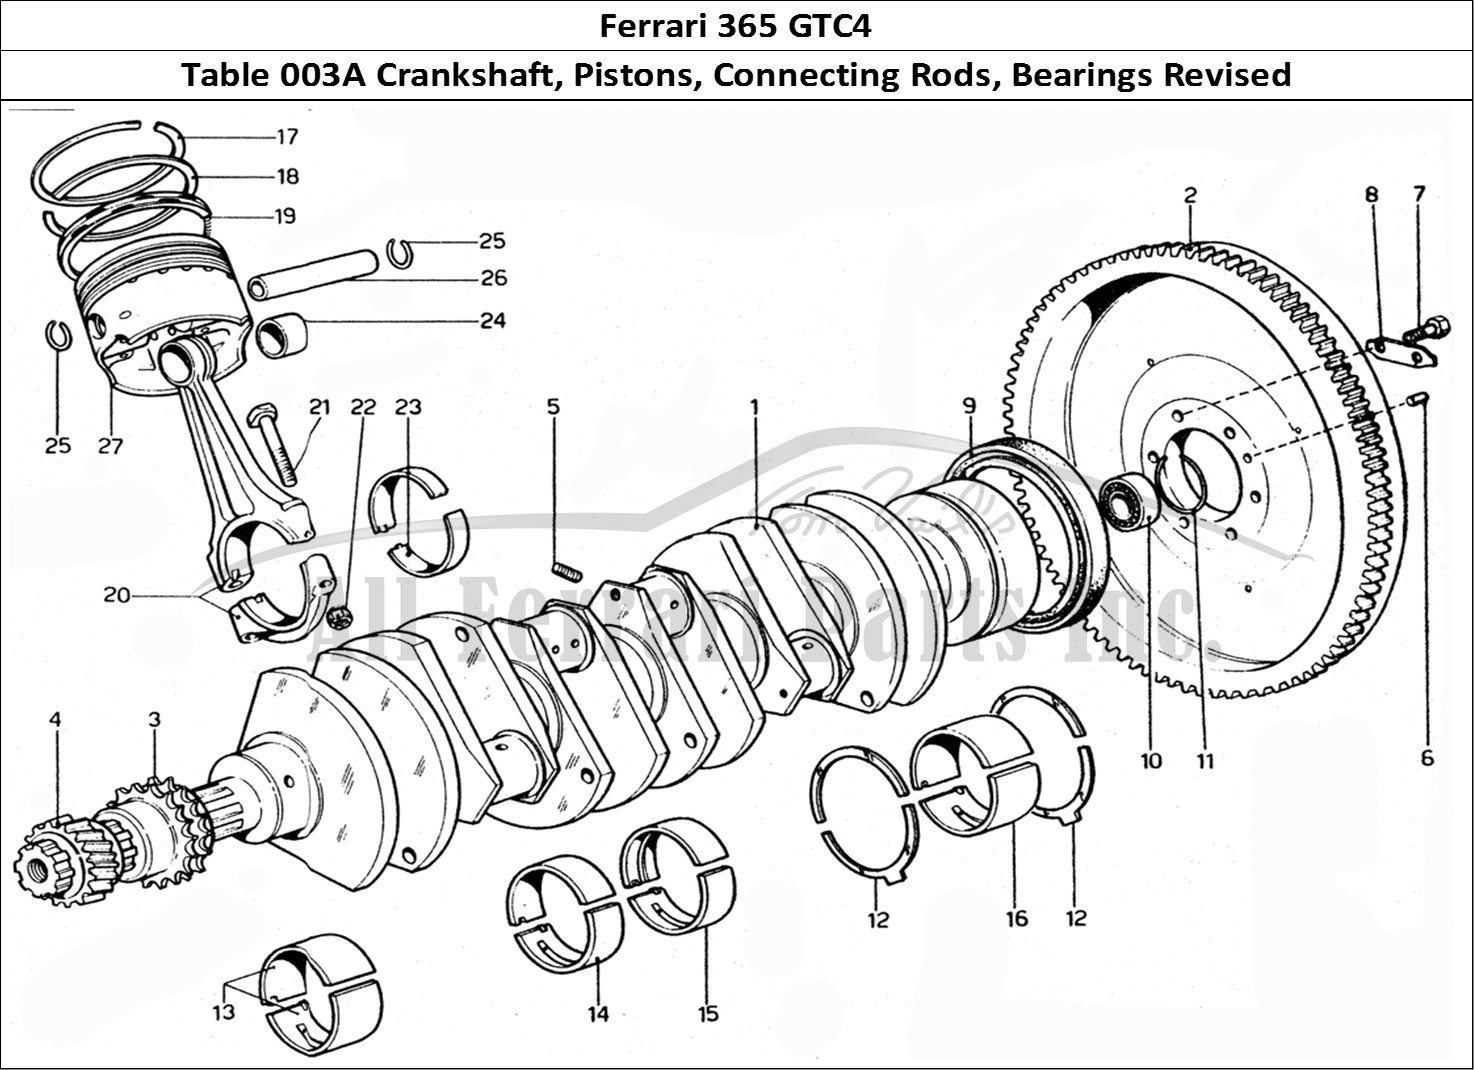 Ferrari Parts Ferrari 365 GTC4 (Mechanical) Page 003 Crank - Brearings & Pist